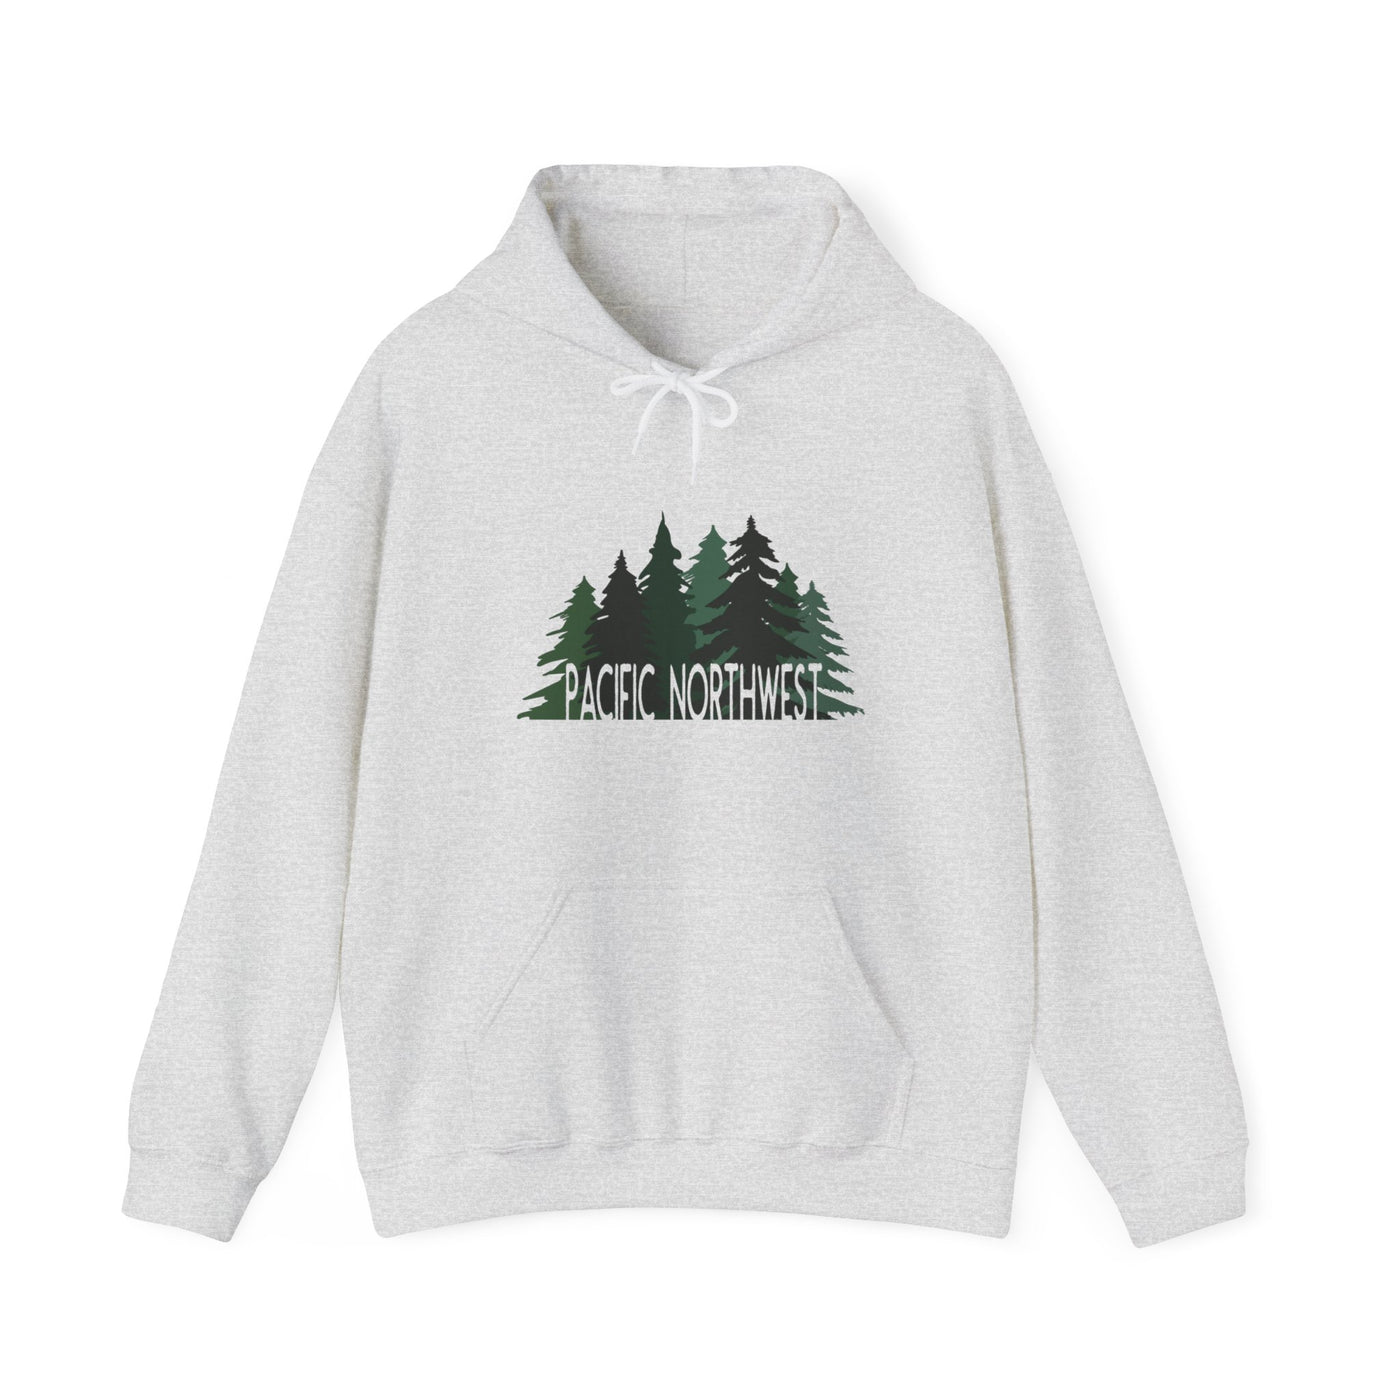 Pacific Northwest Forest Hooded Sweatshirt